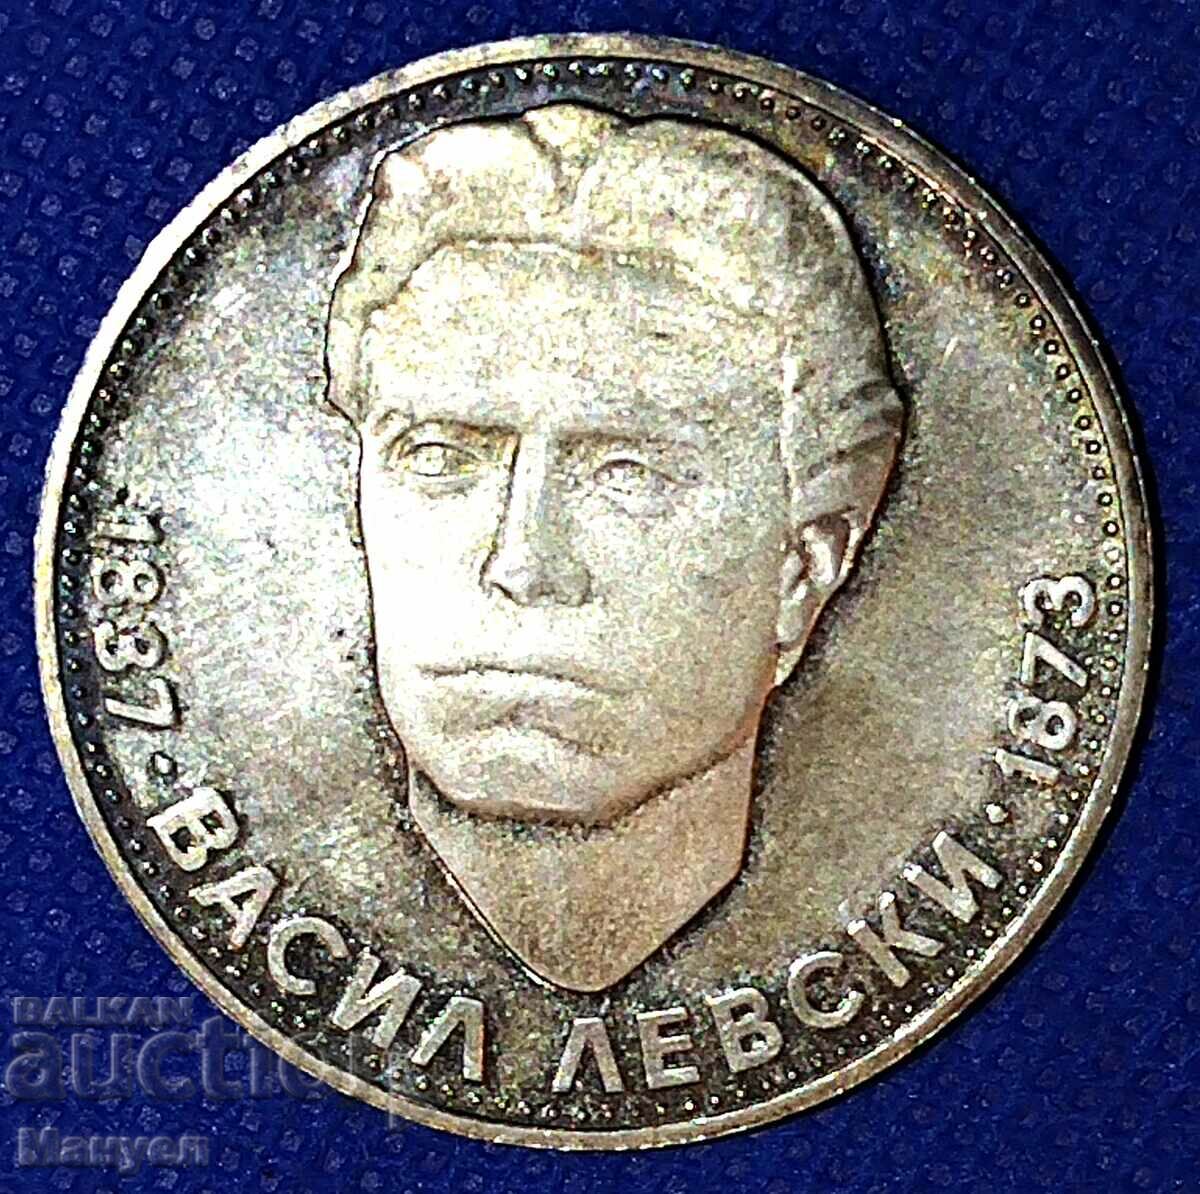 5 BGN silver - 1973